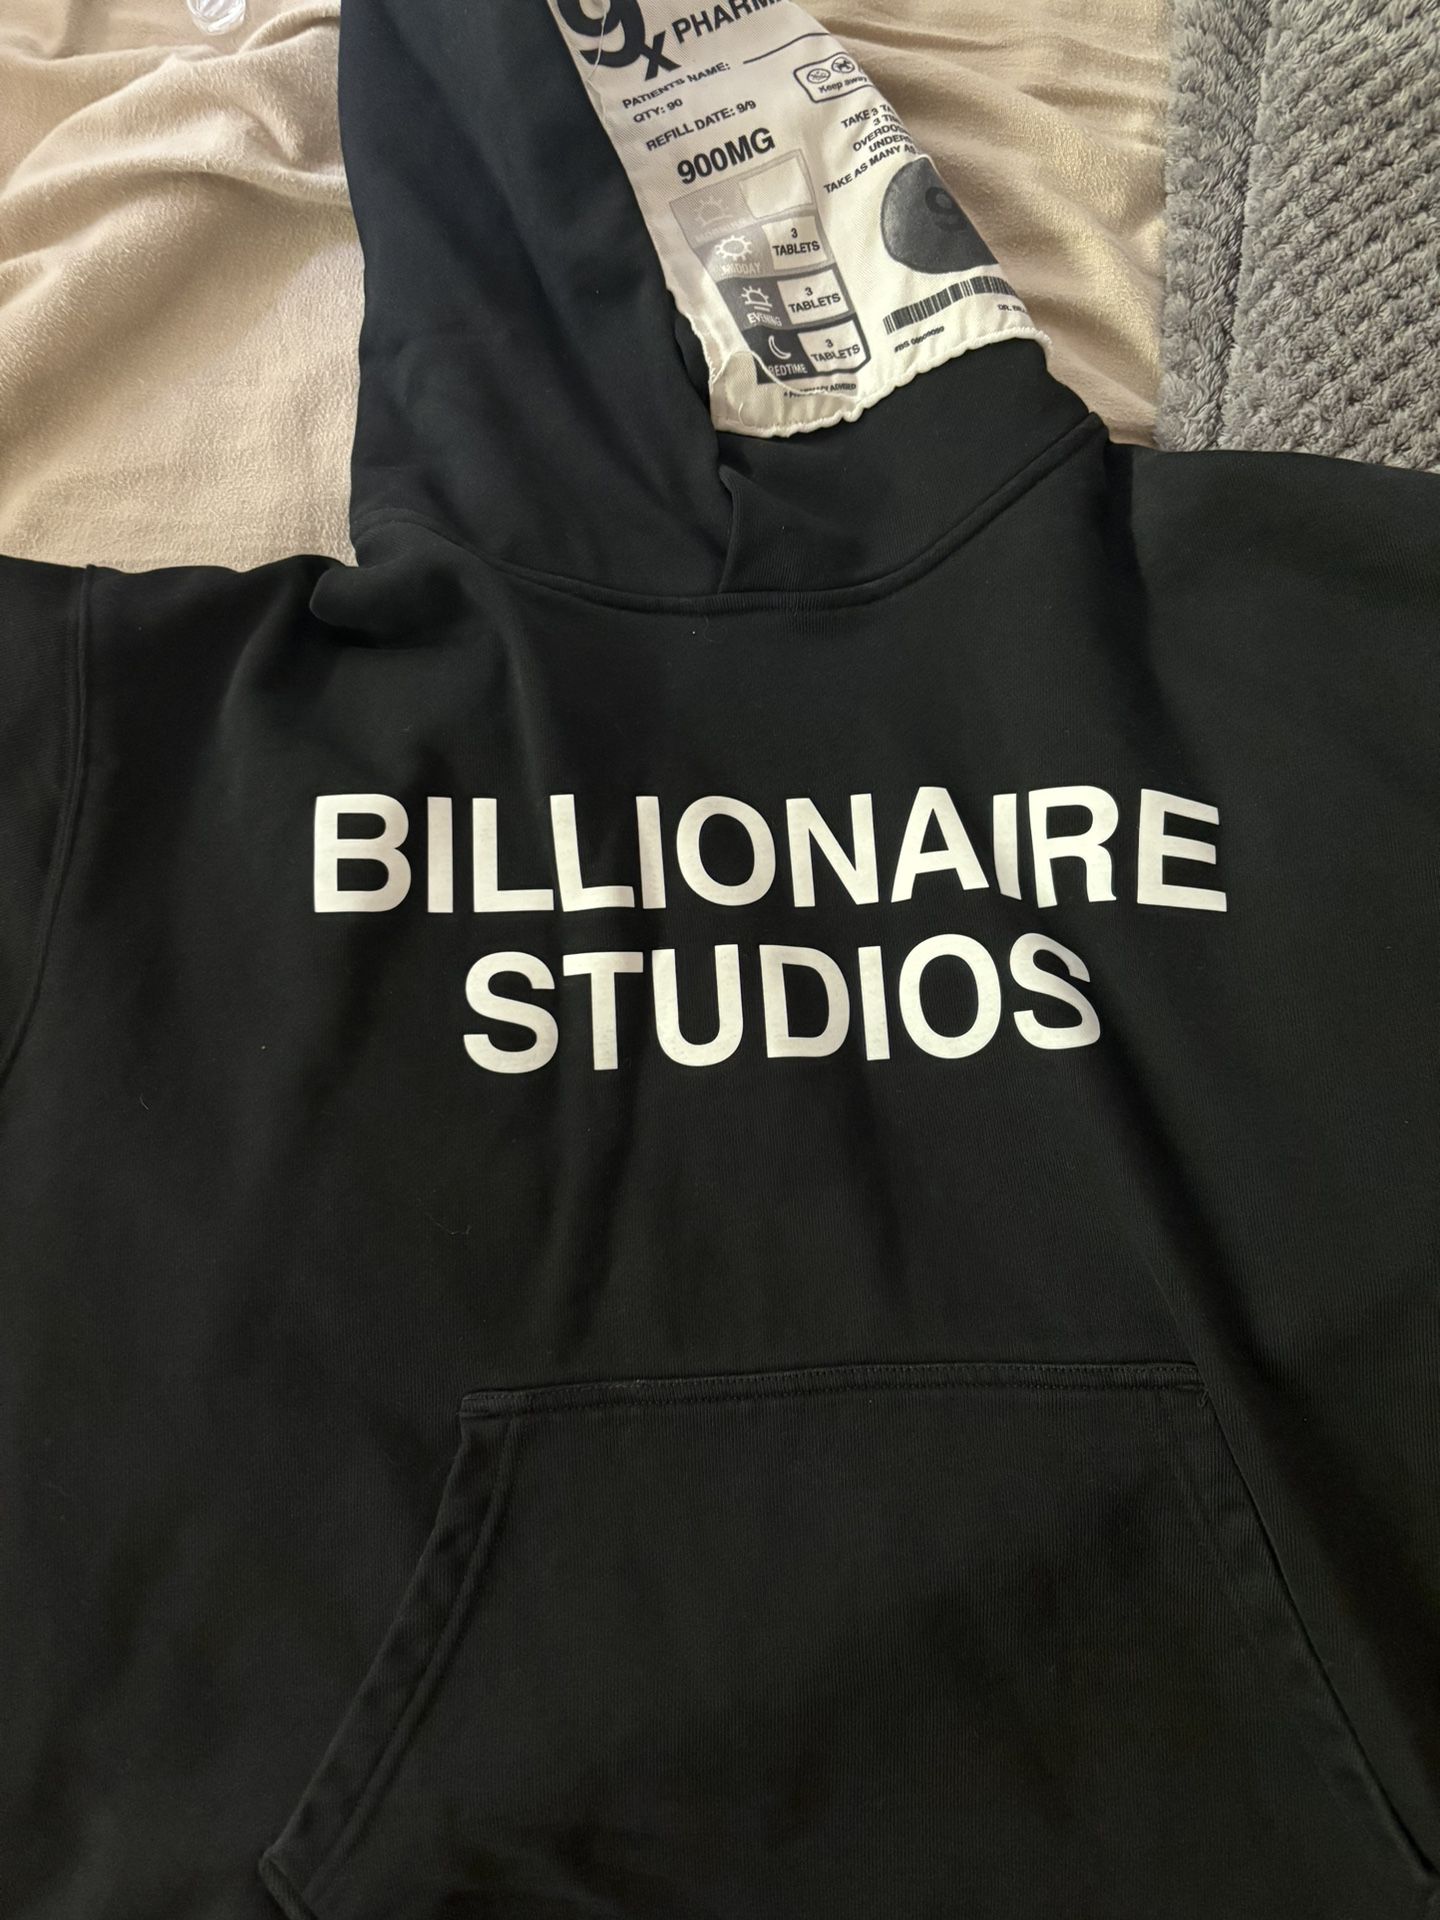 Billionaire Studios Hoodie